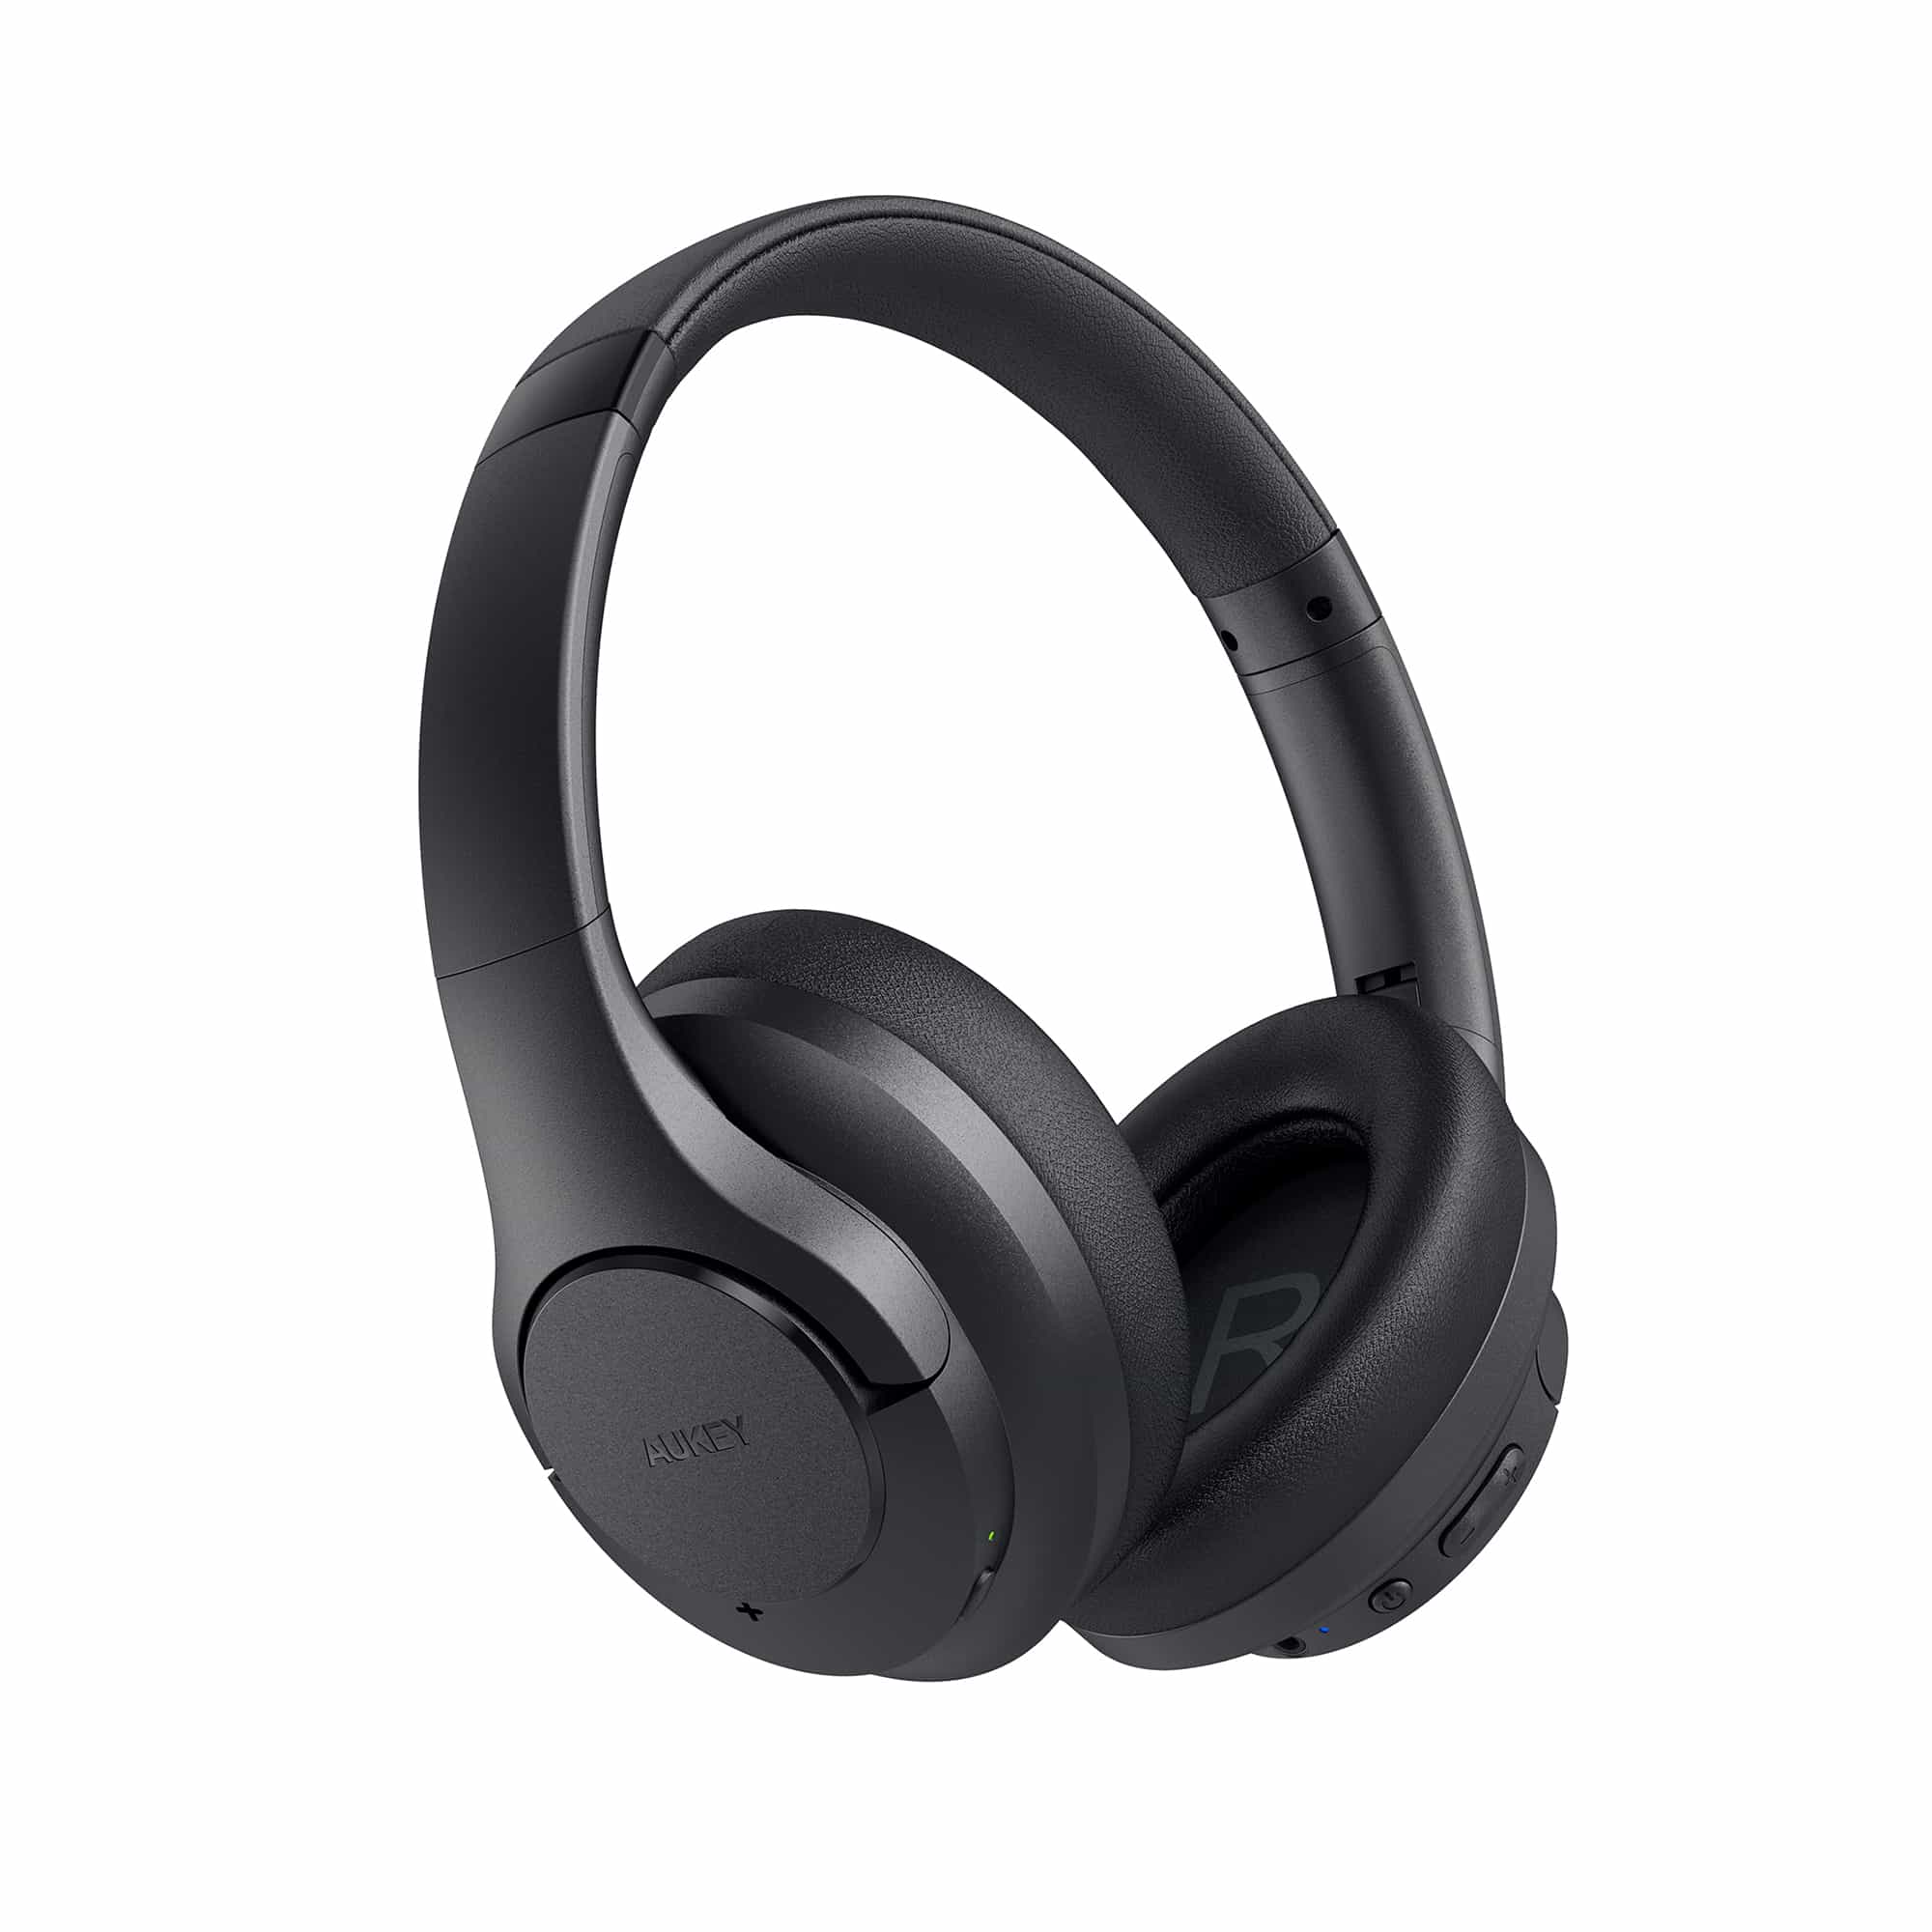 EP-N12 ANC Hybrid Active Noise Cancelling Headphones